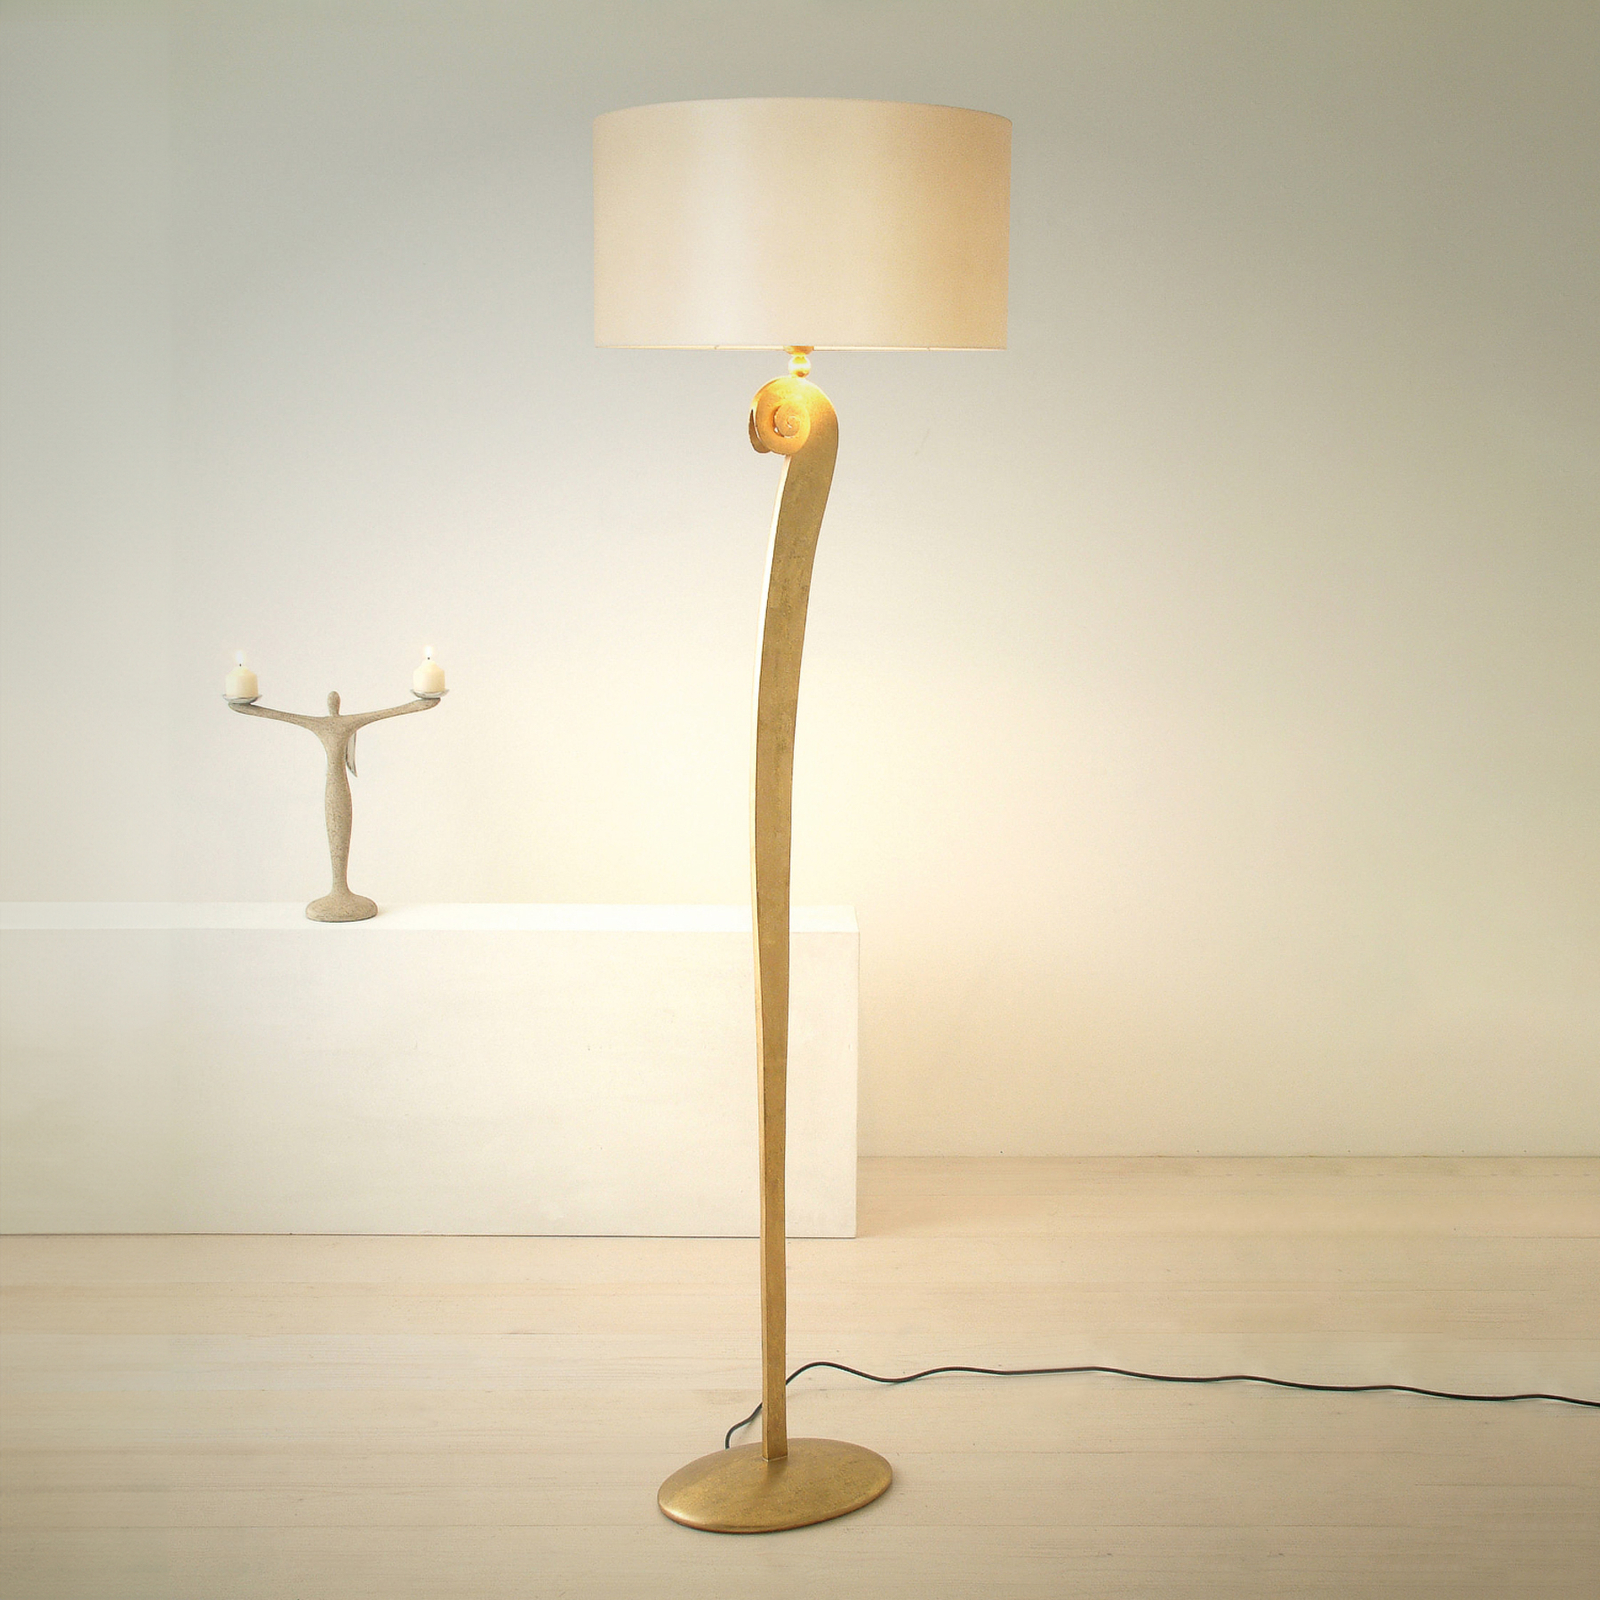 Lino golvlampa, guldfärgad/ecru, höjd 160 cm, järn